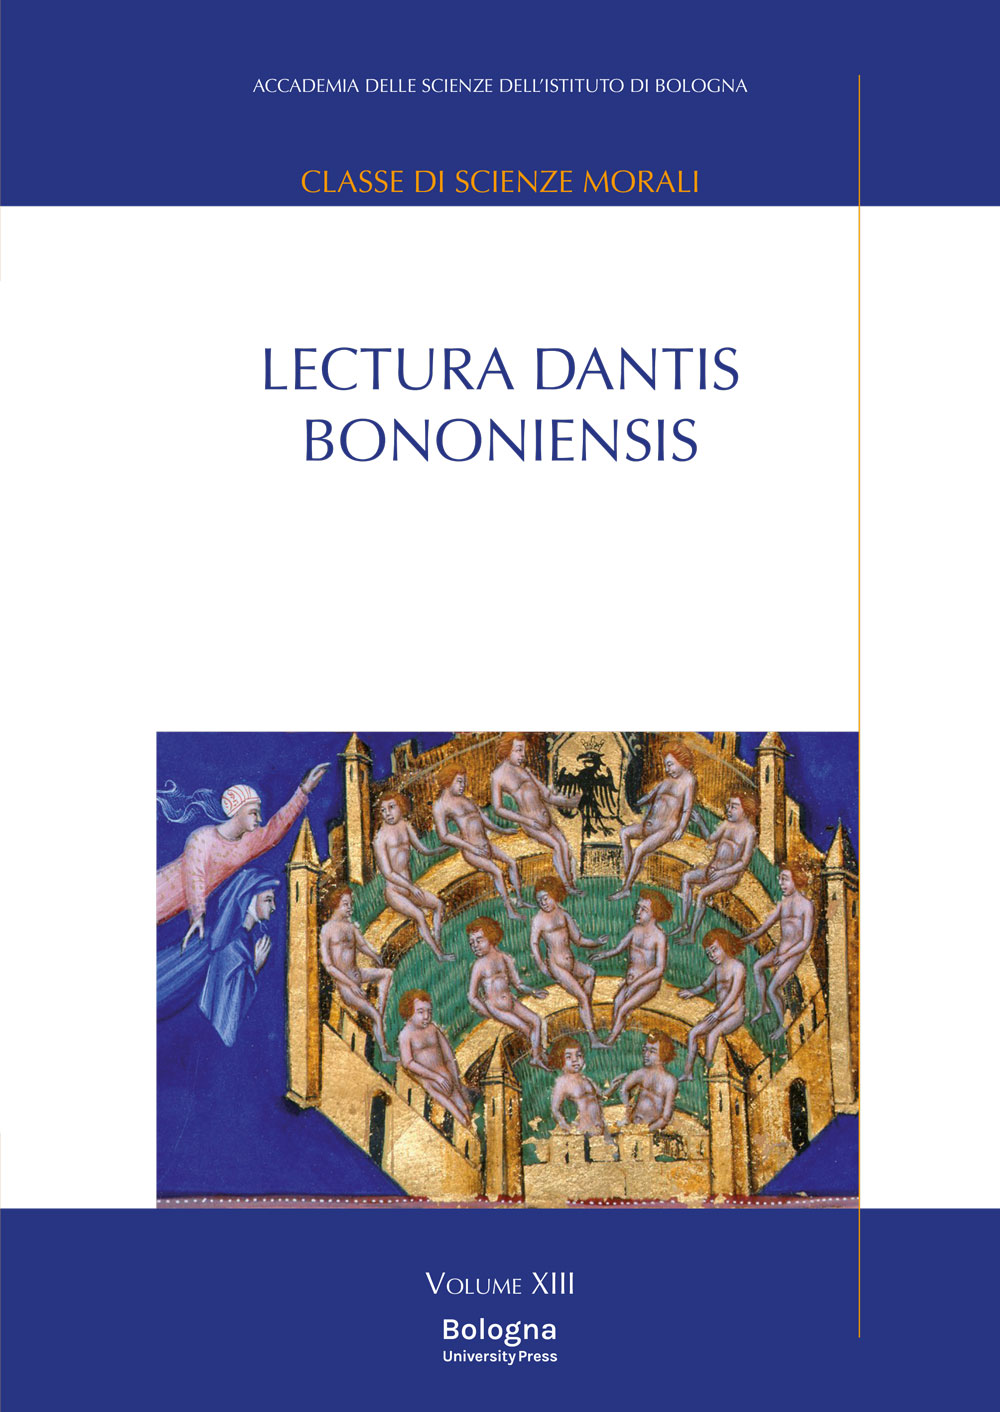 Lectura Dantis Bononiensis XIII - Bologna University Press